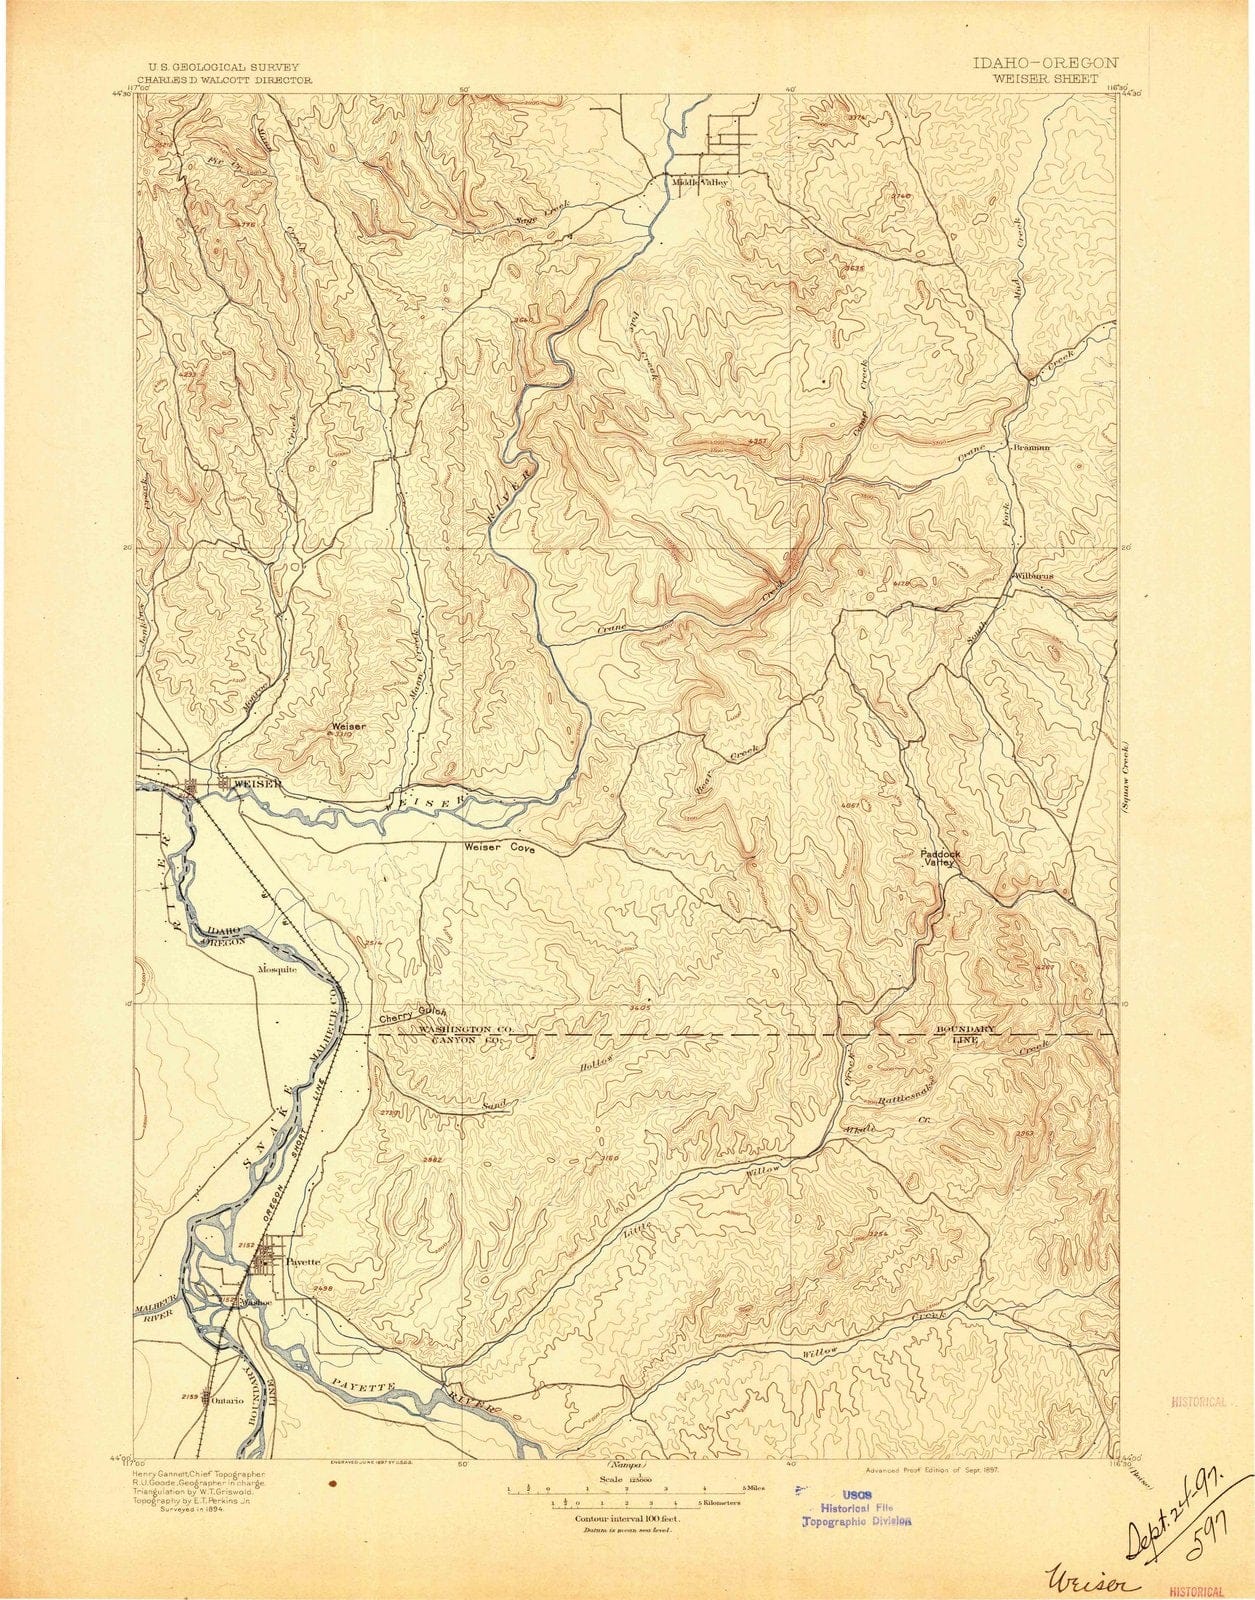 1897 Weiser, ID - Idaho - USGS Topographic Map